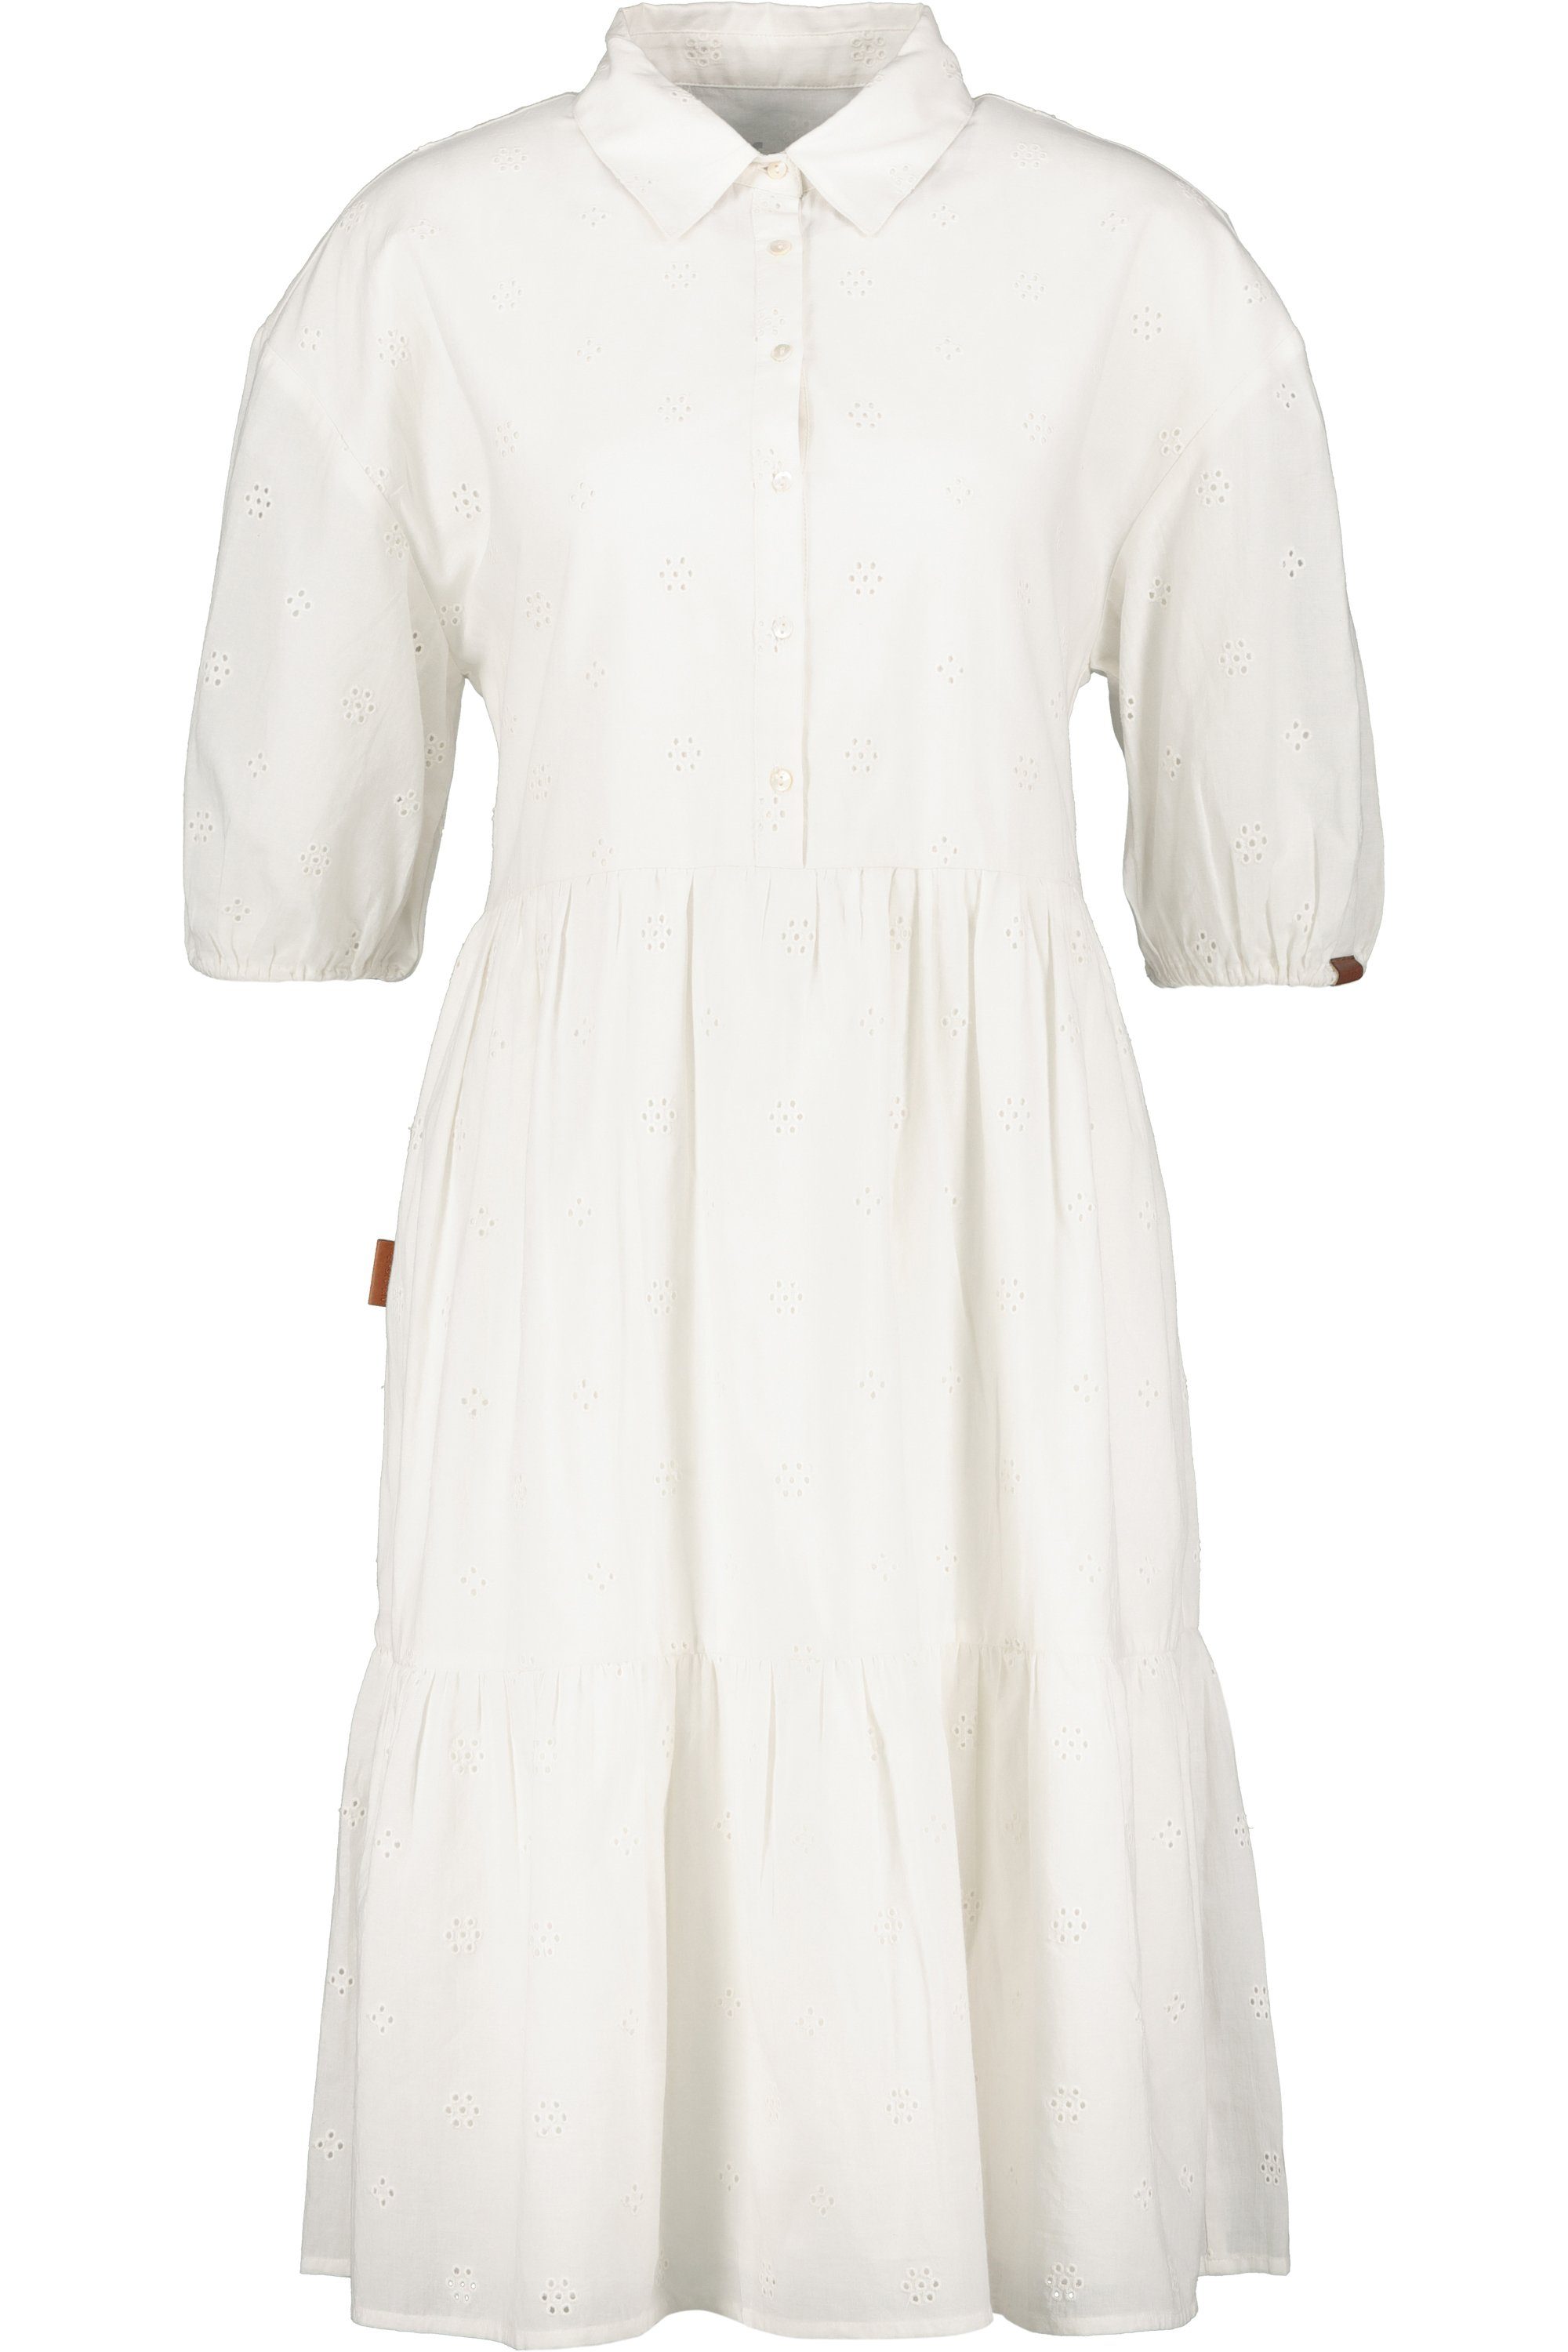 Kleid Alife Damen Sommerkleid, E Kickin SalomeAK Dress white & Jerseykleid